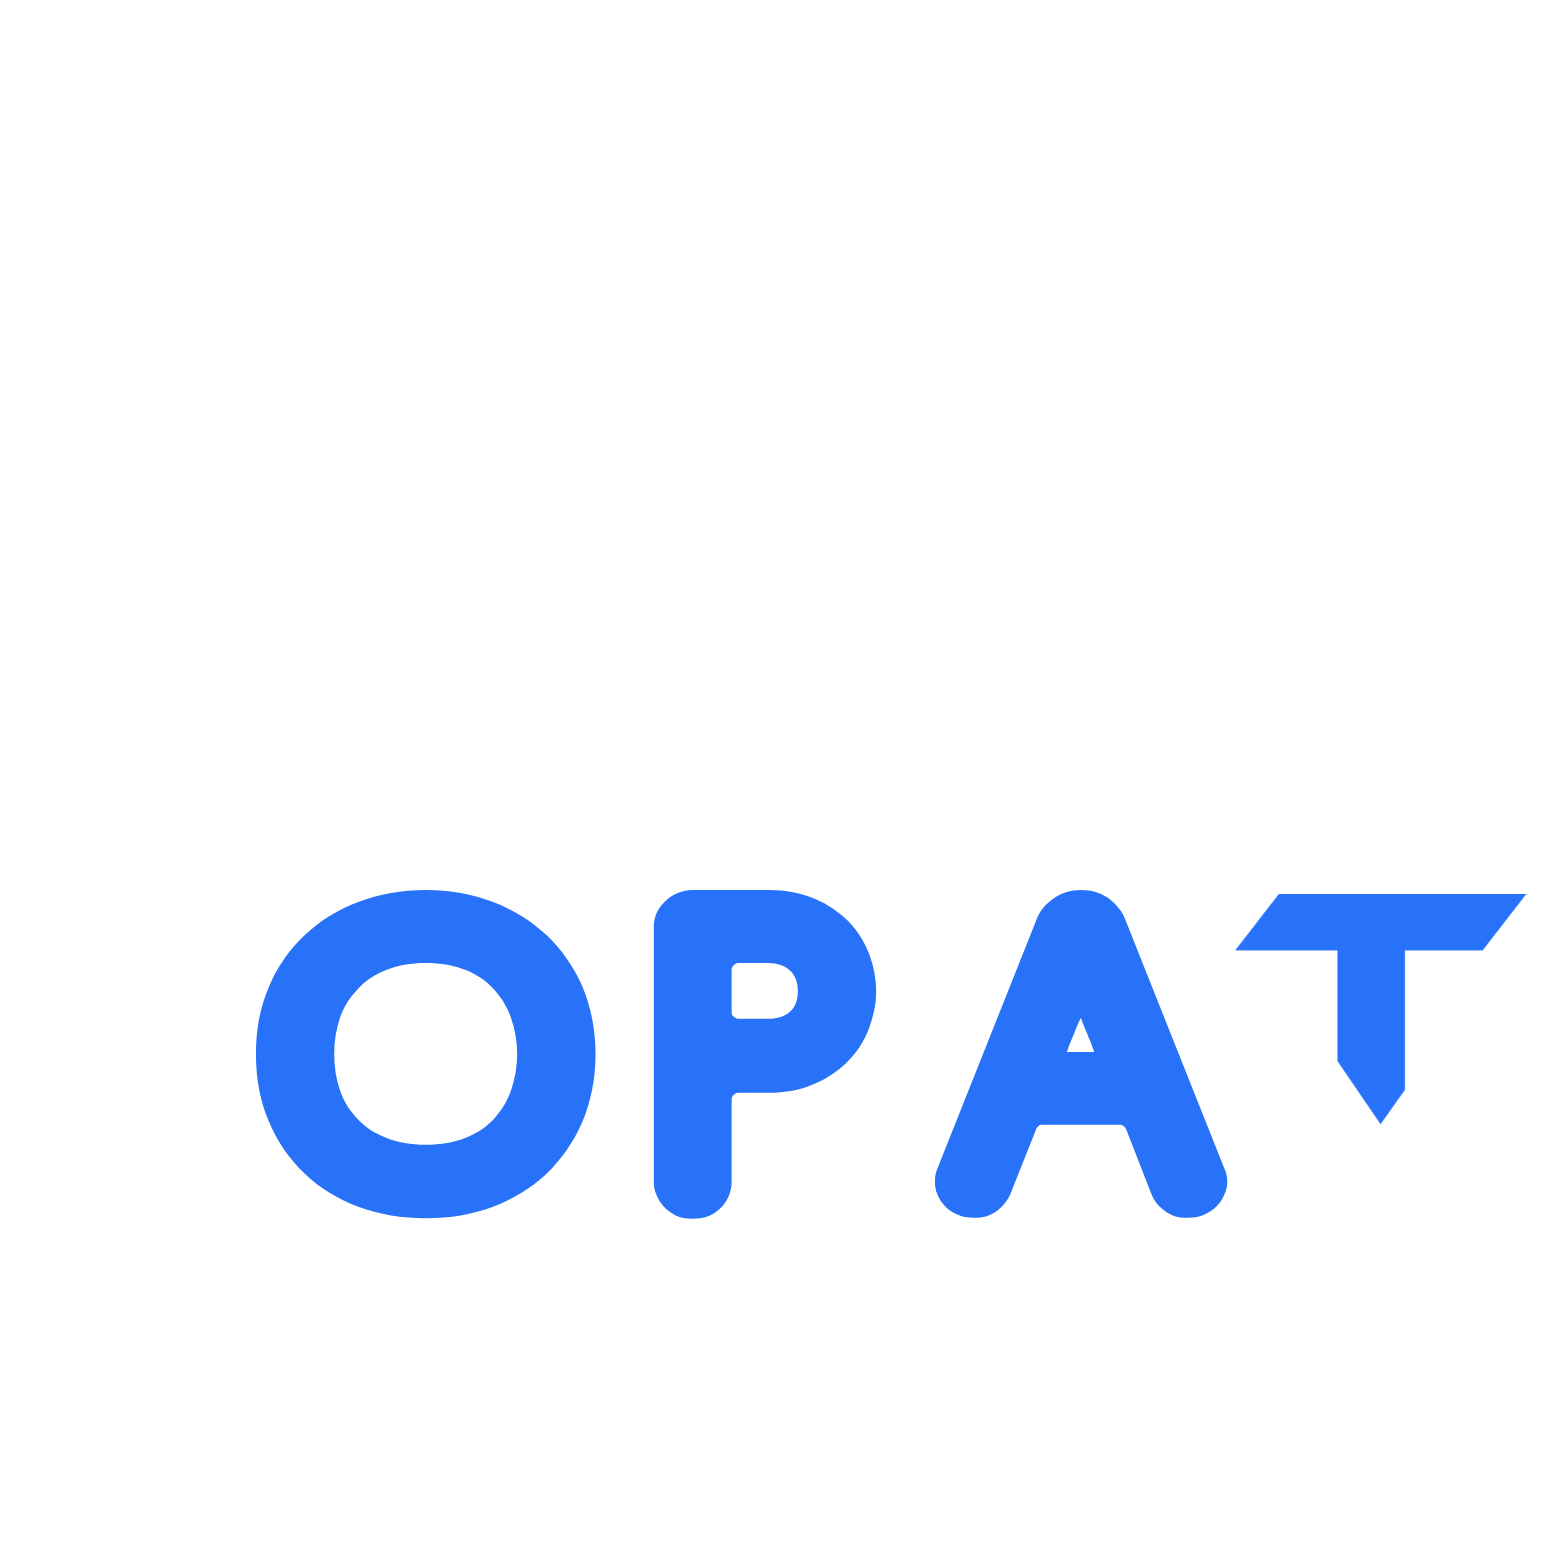 OPATV